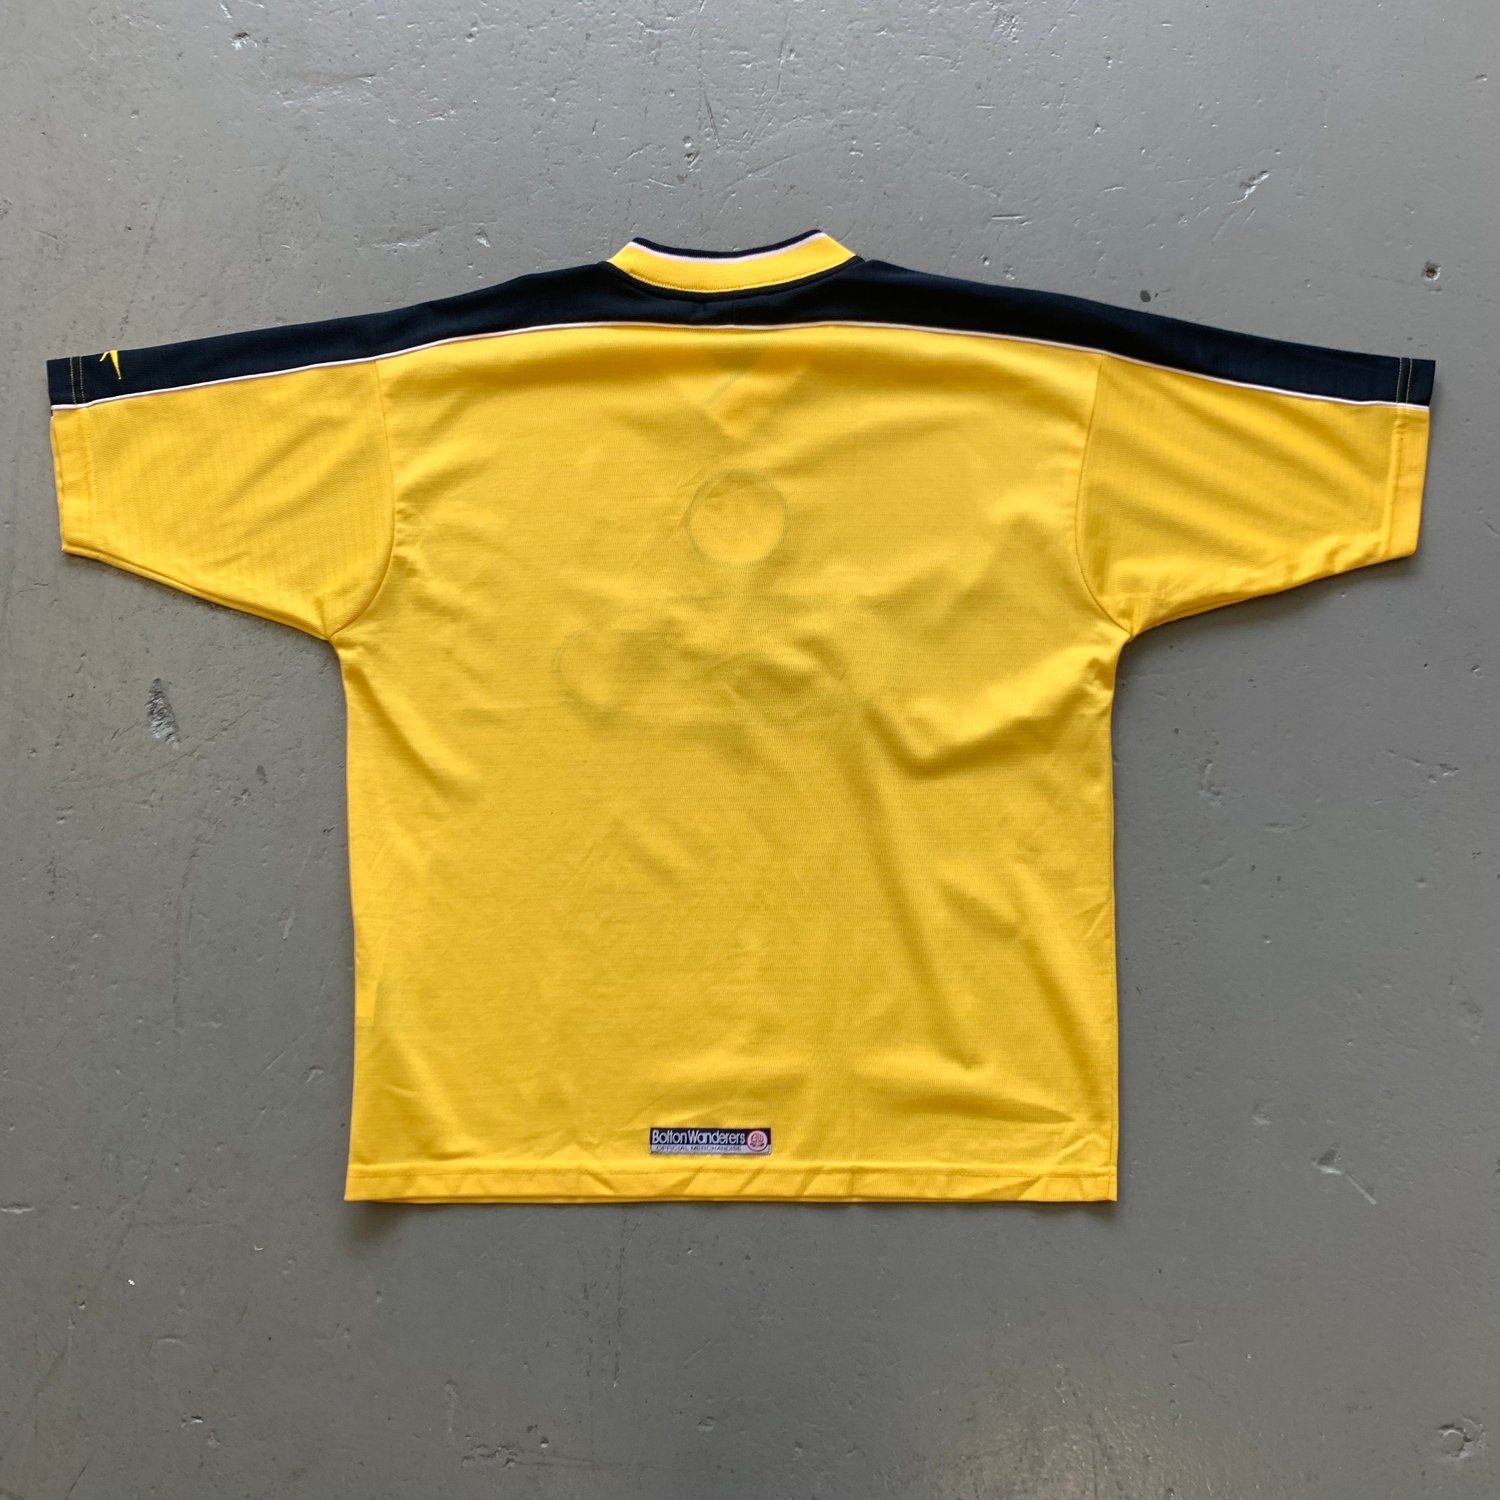 Image of 98 Bolton away shirt size medium 